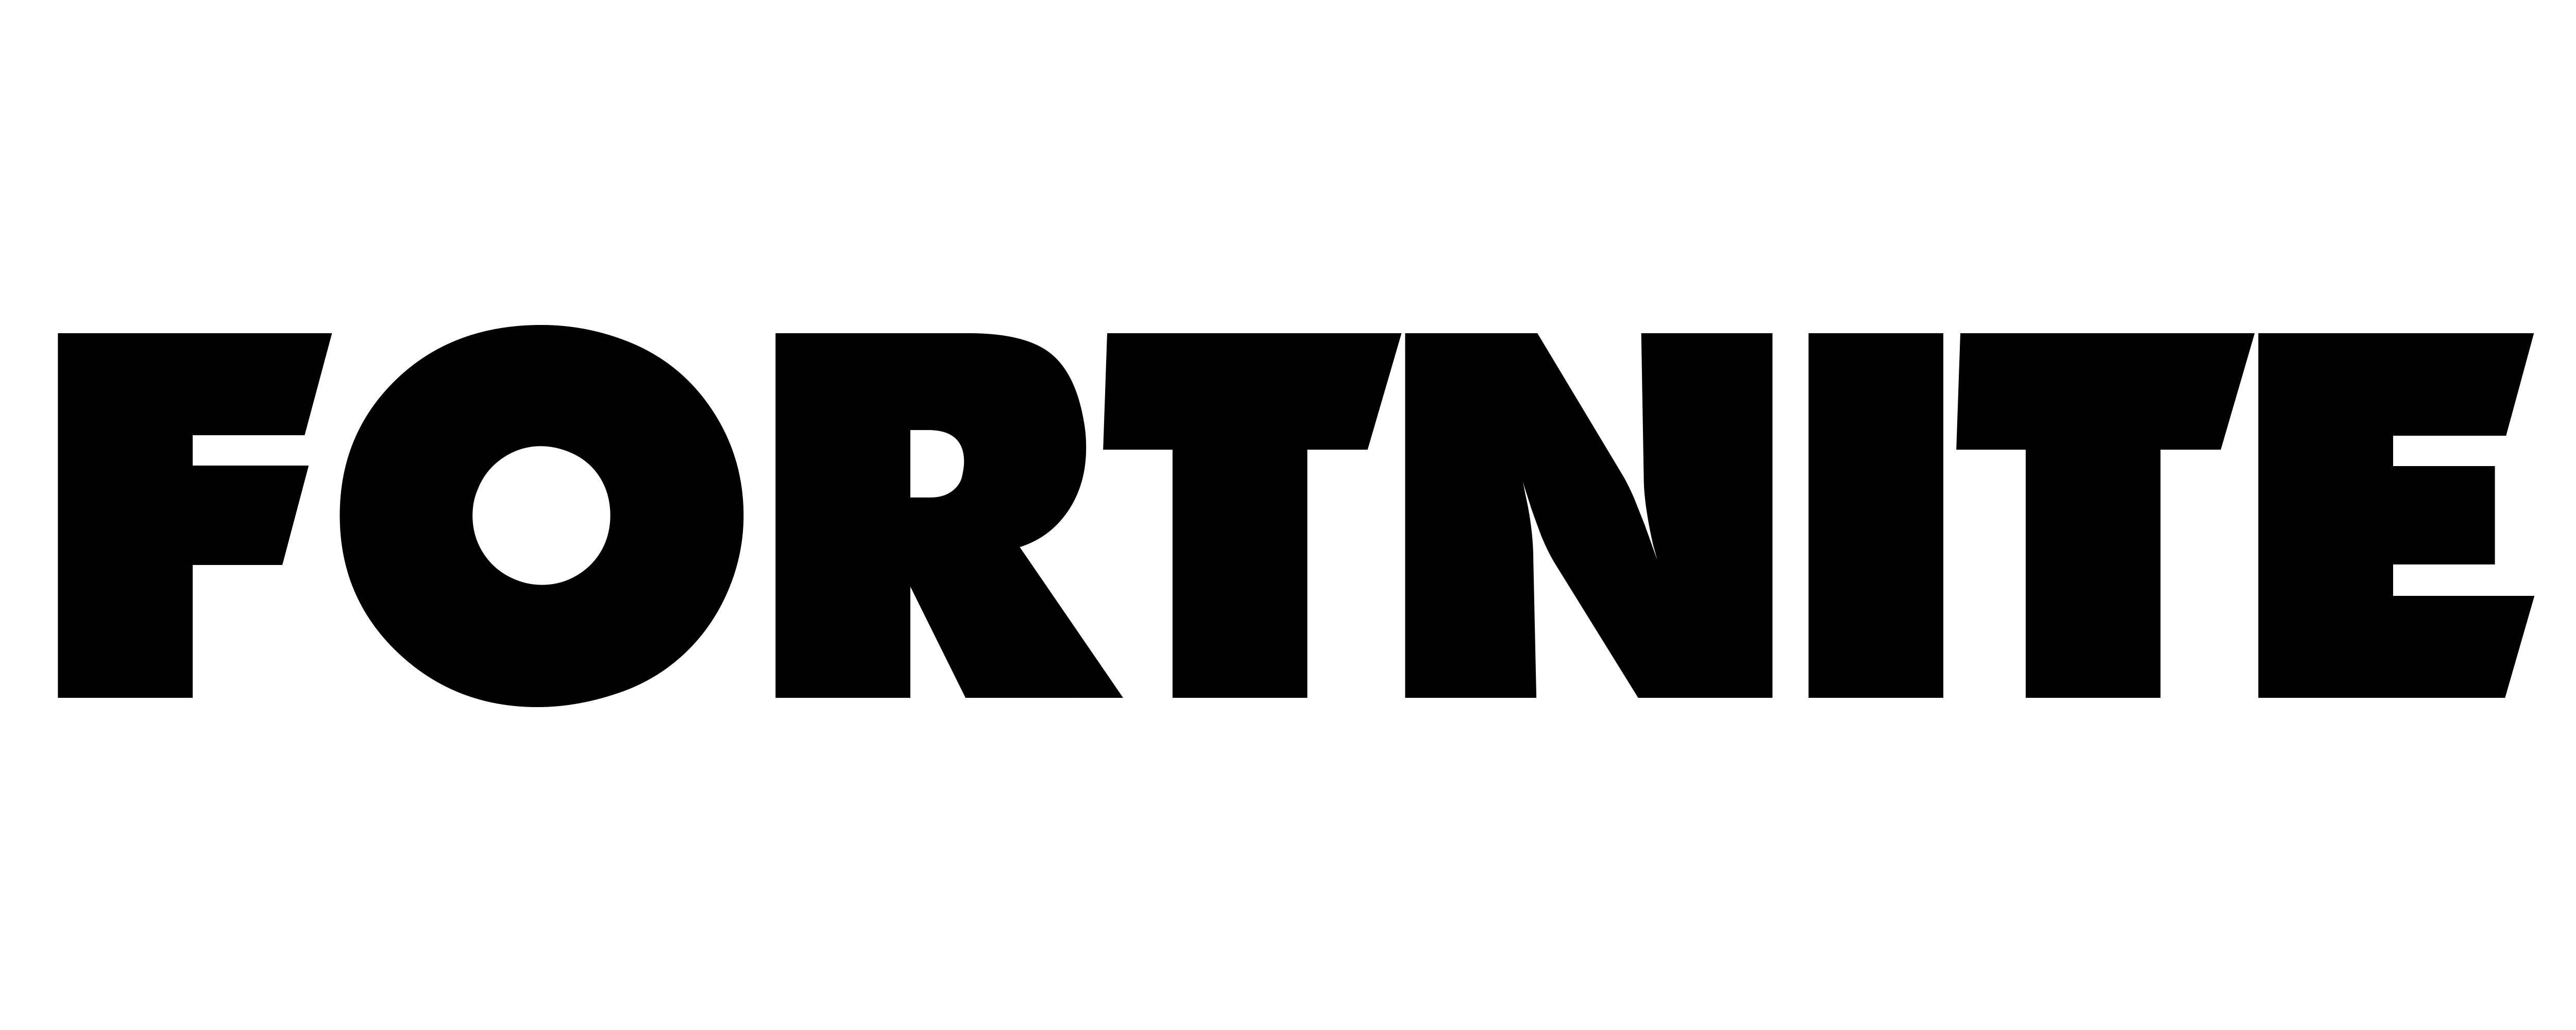 Fortnite Png Logo - Pubg Gaming Logos Png {#470152 - Free Cliparts